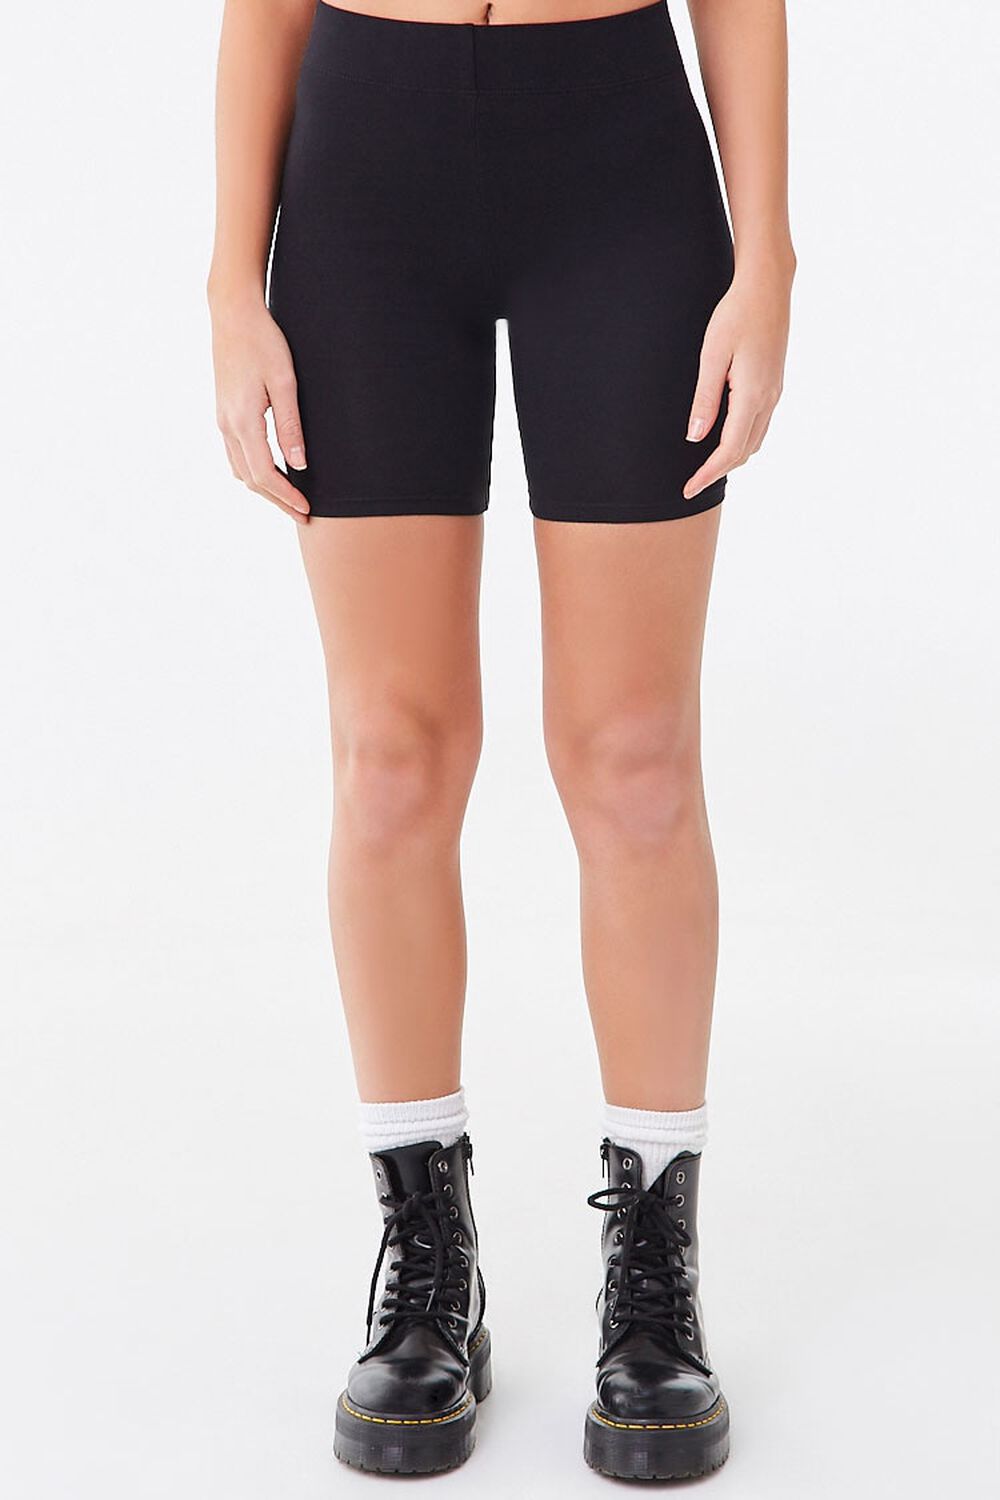 Cotton-Blend Biker Shorts, image 2